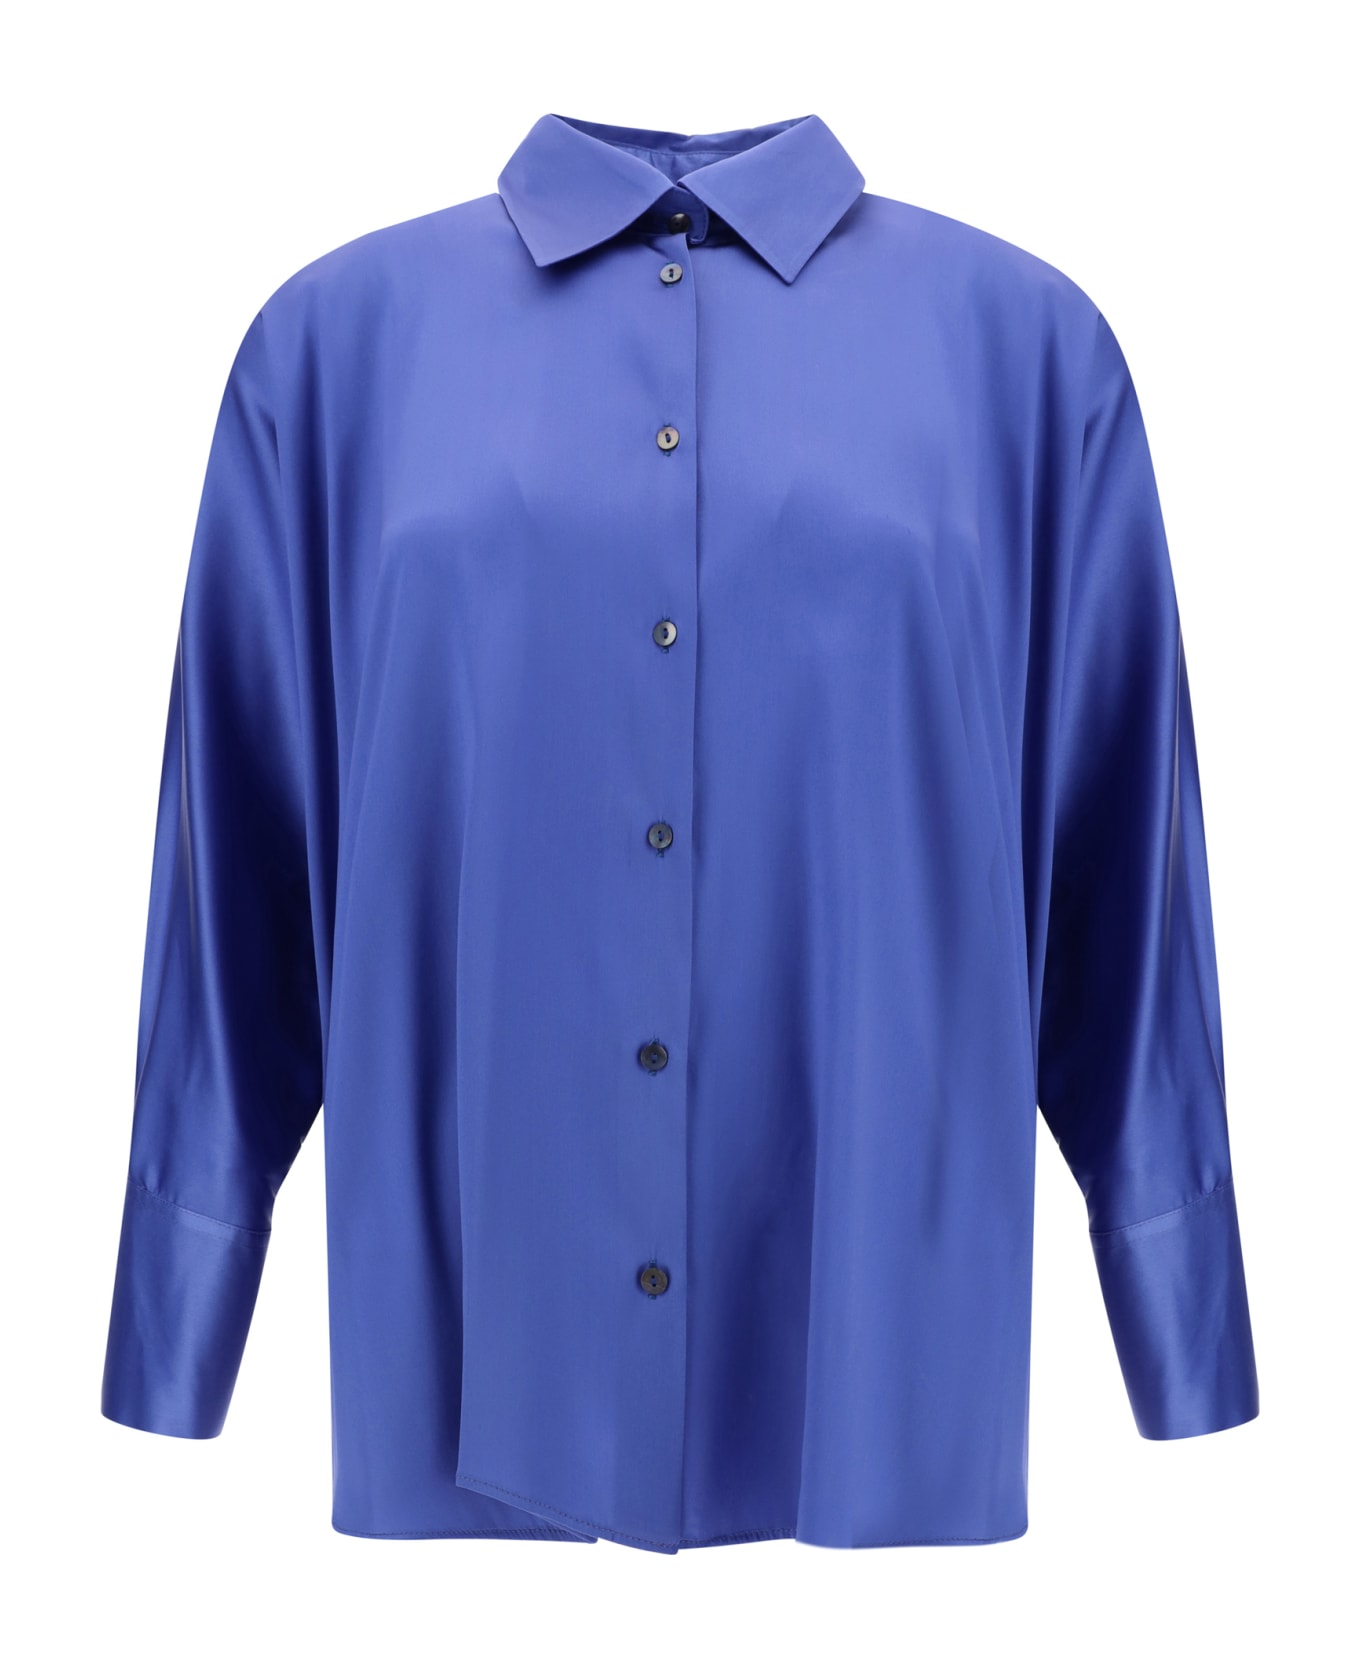 Ella Kimono Shirt - Cobalto 833 シャツ